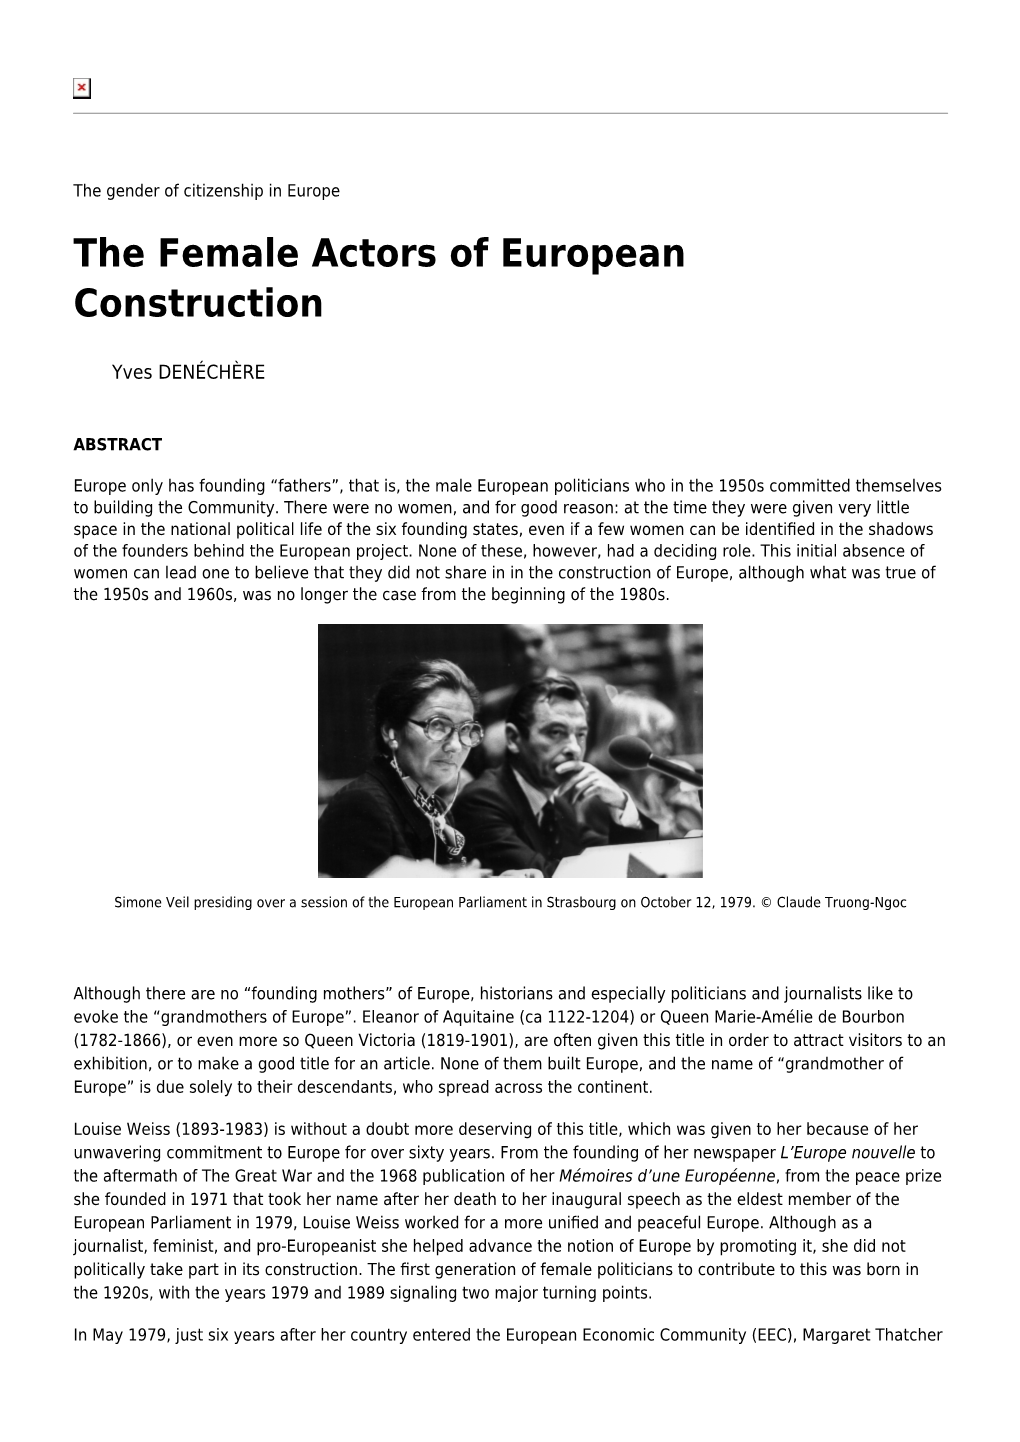 The Female Actors of European Construction